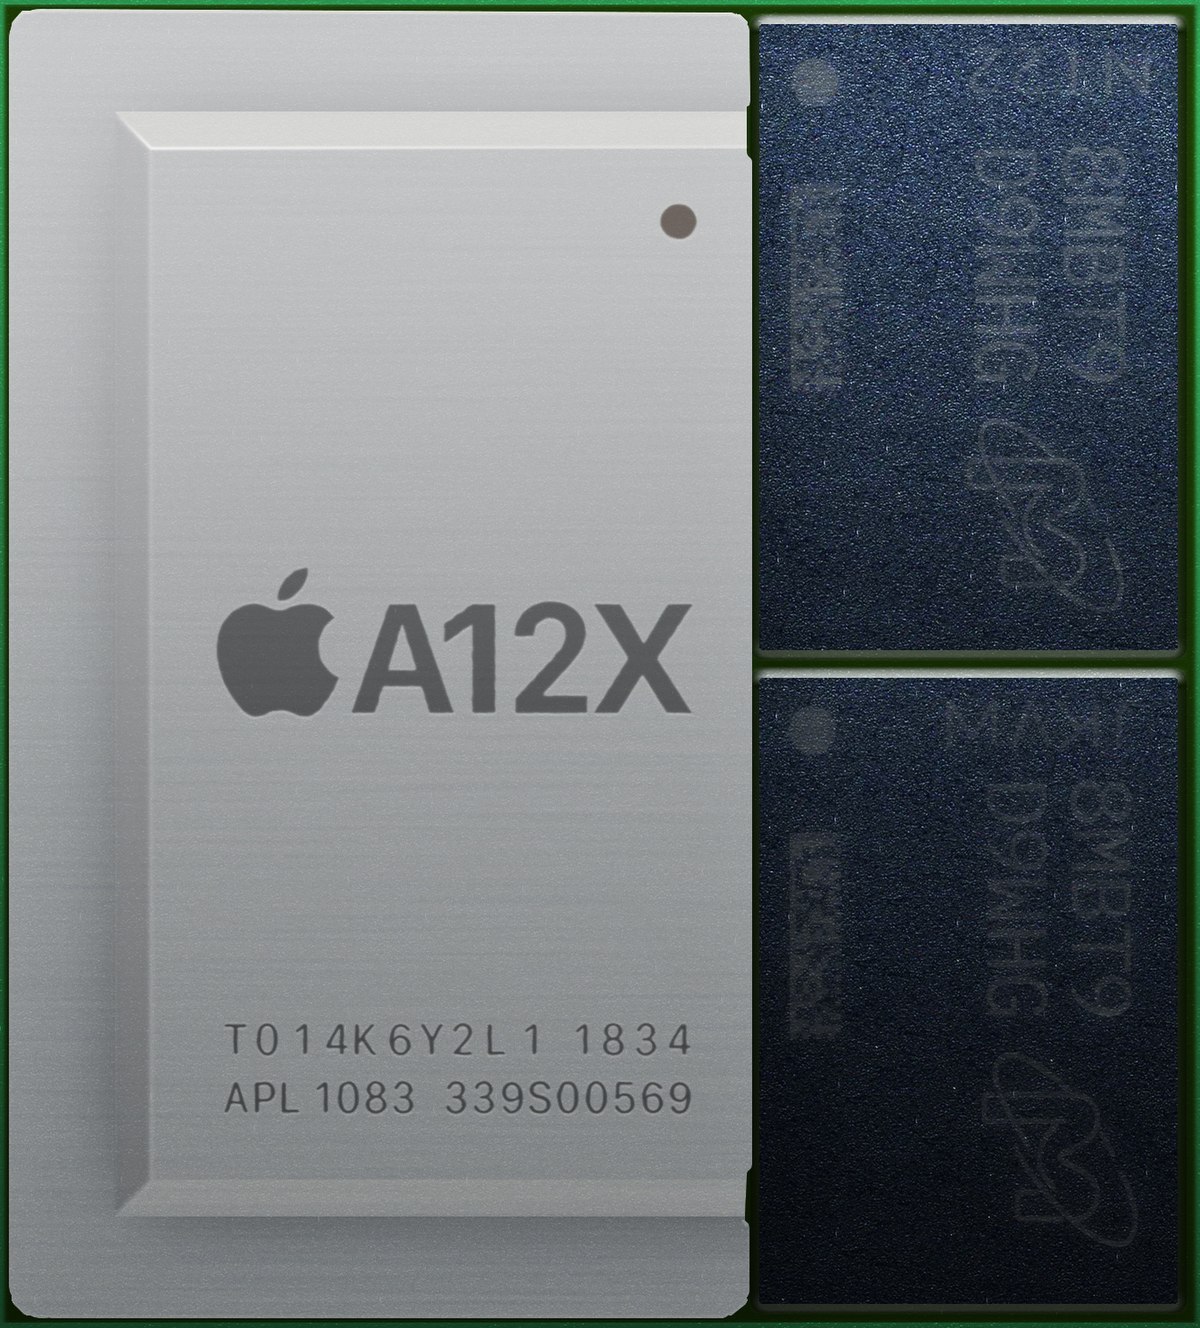 avx2 instruction set mac